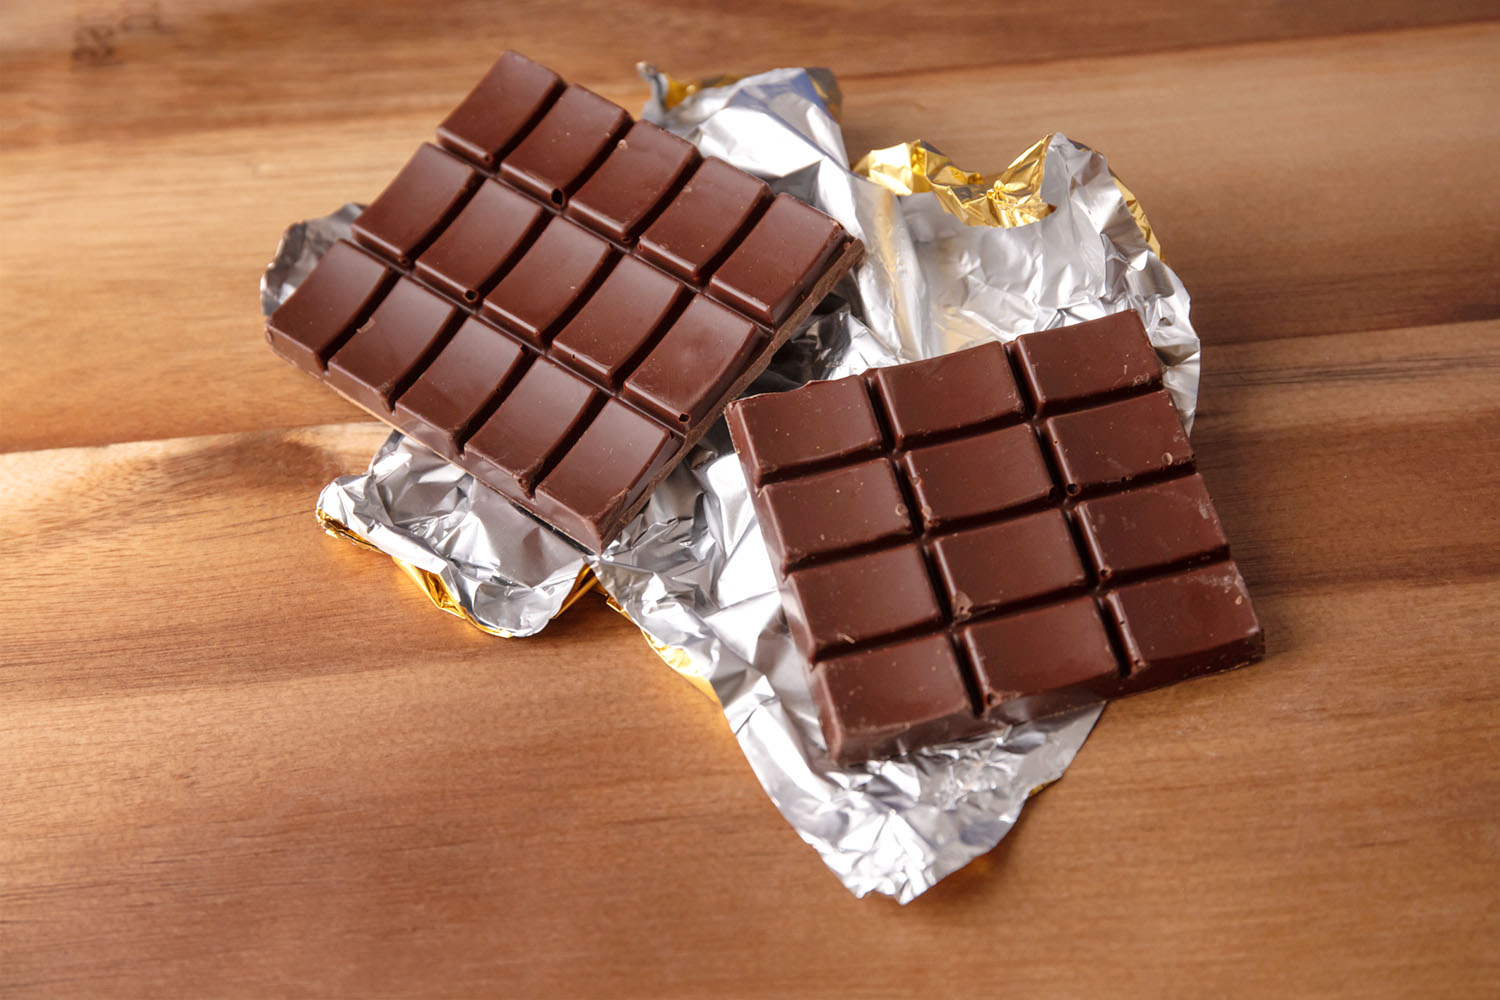 Organic Pure Chocolate 90% | Lab-tested | Single Origin | Bean-to-Bar